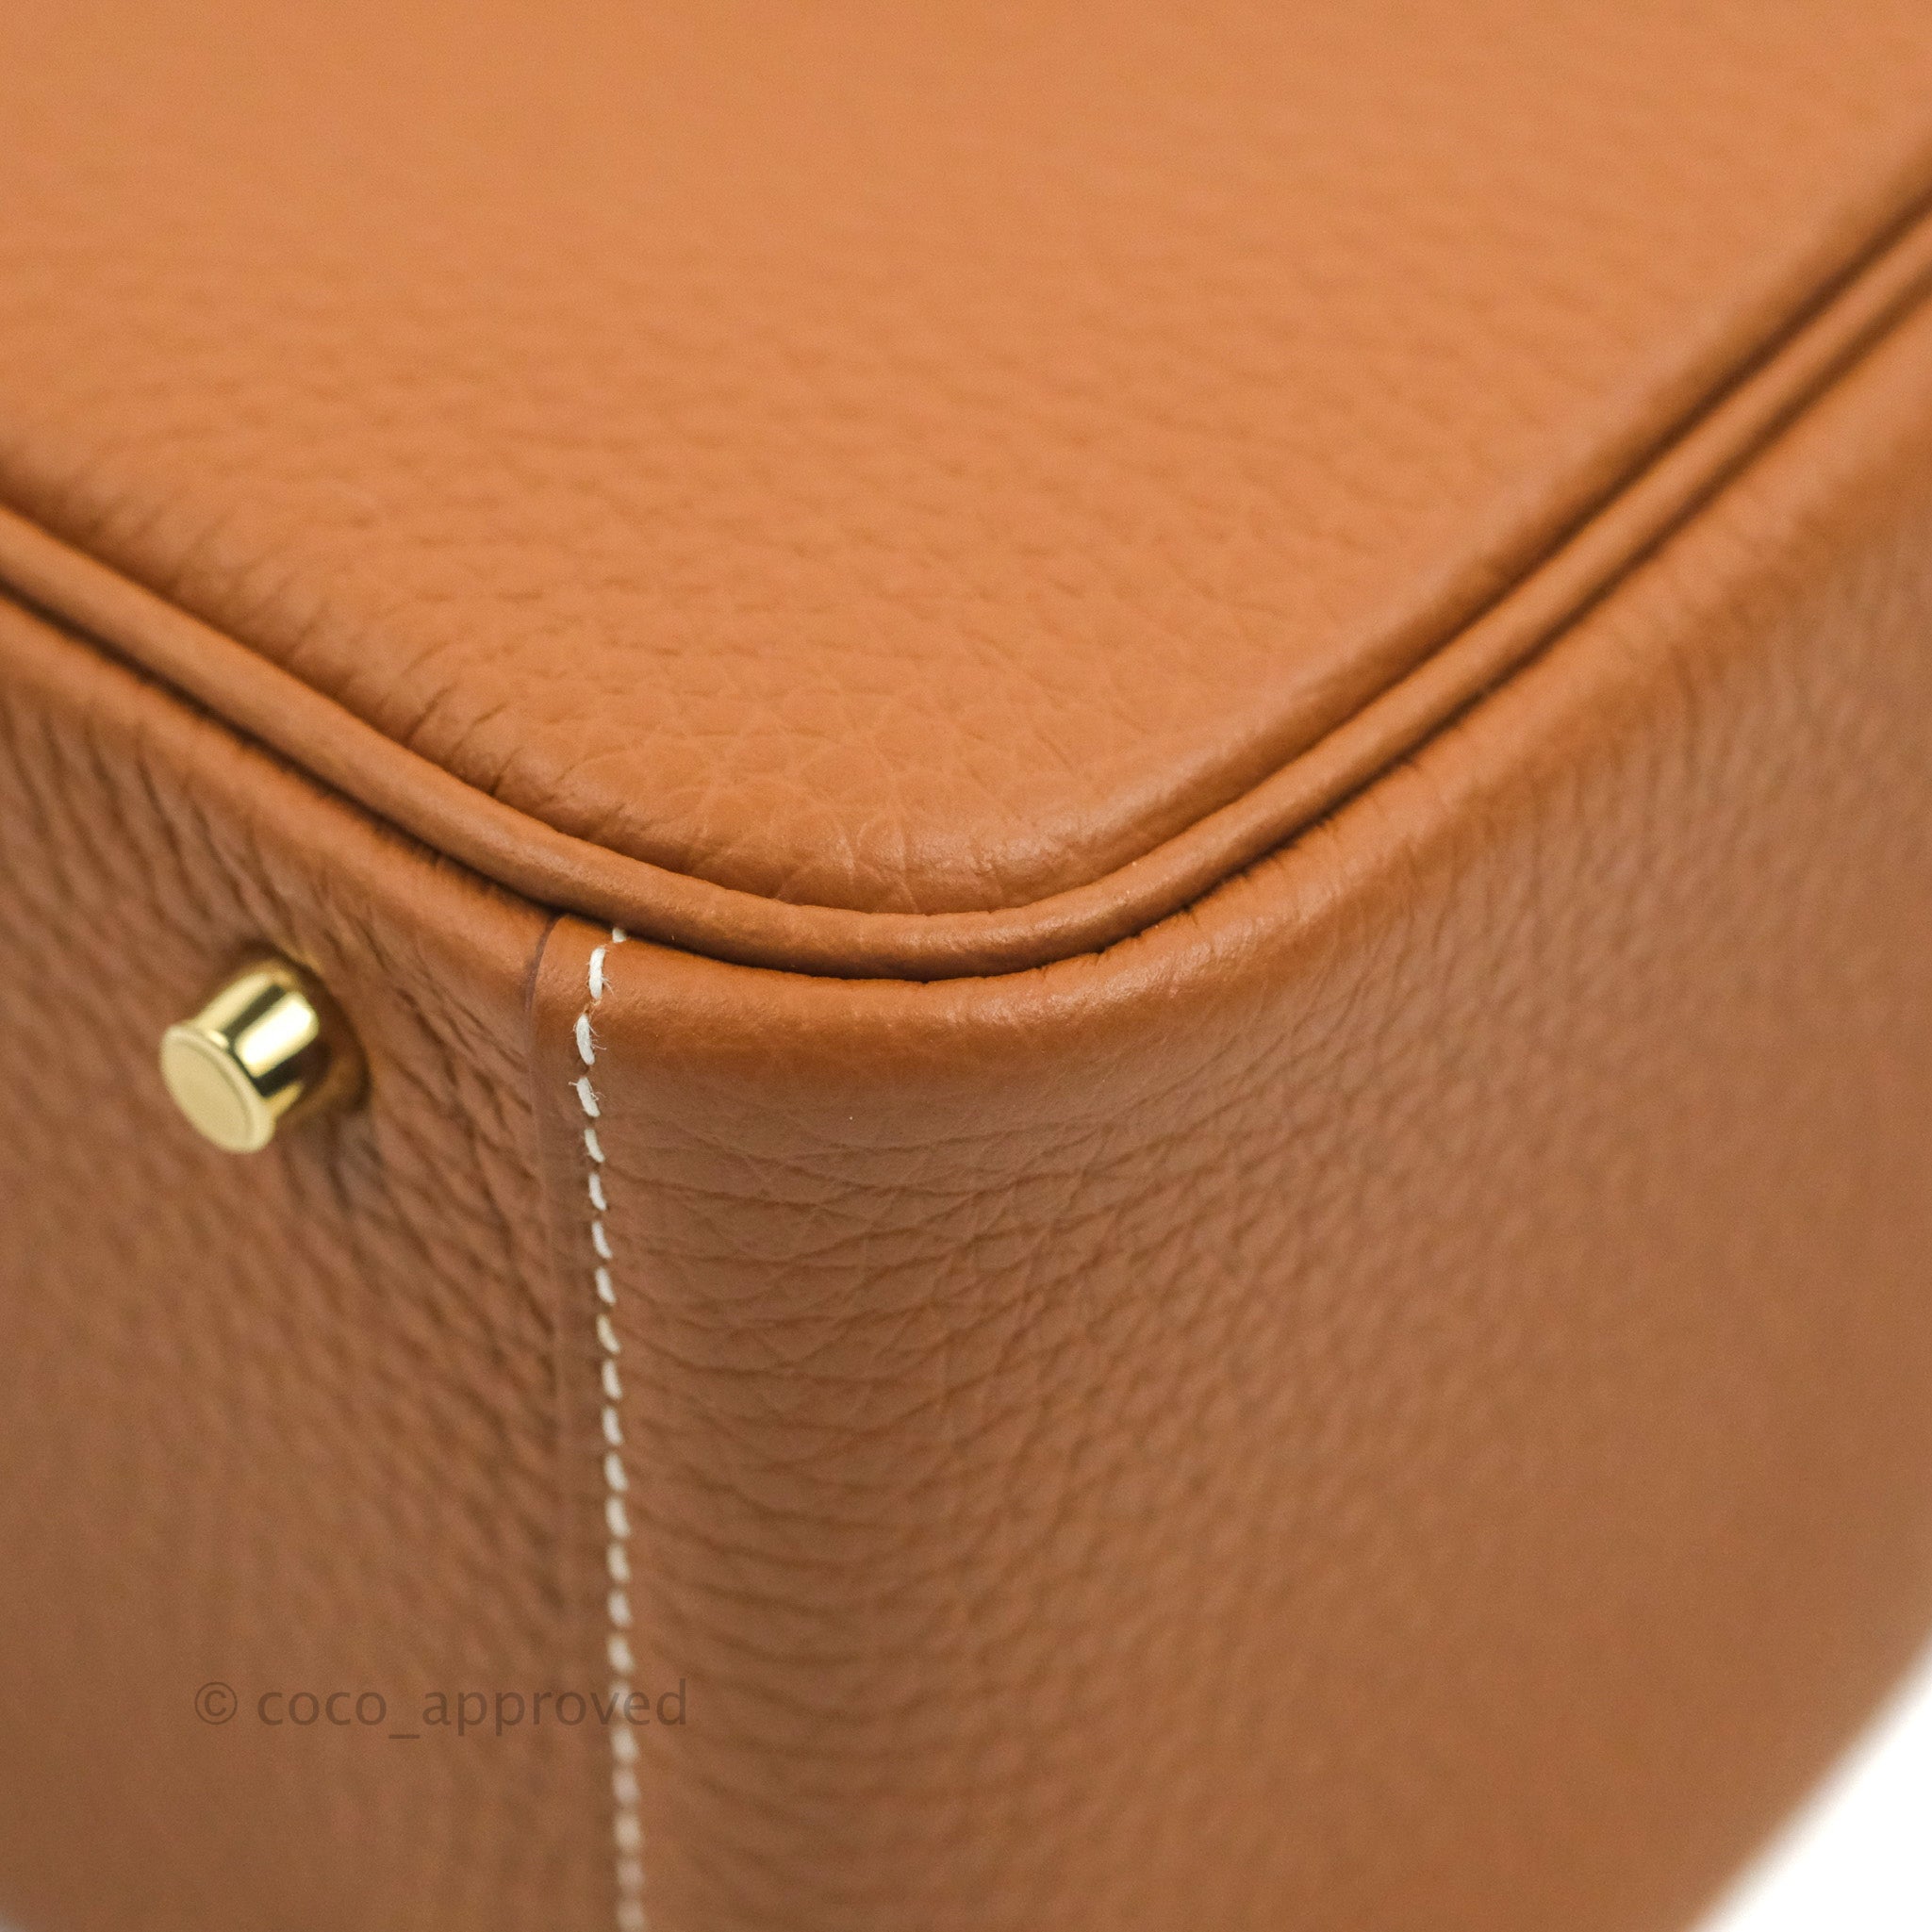 Hermès Mini Lindy 20 Nata Clemence Gold Hardware Bag For Sale at